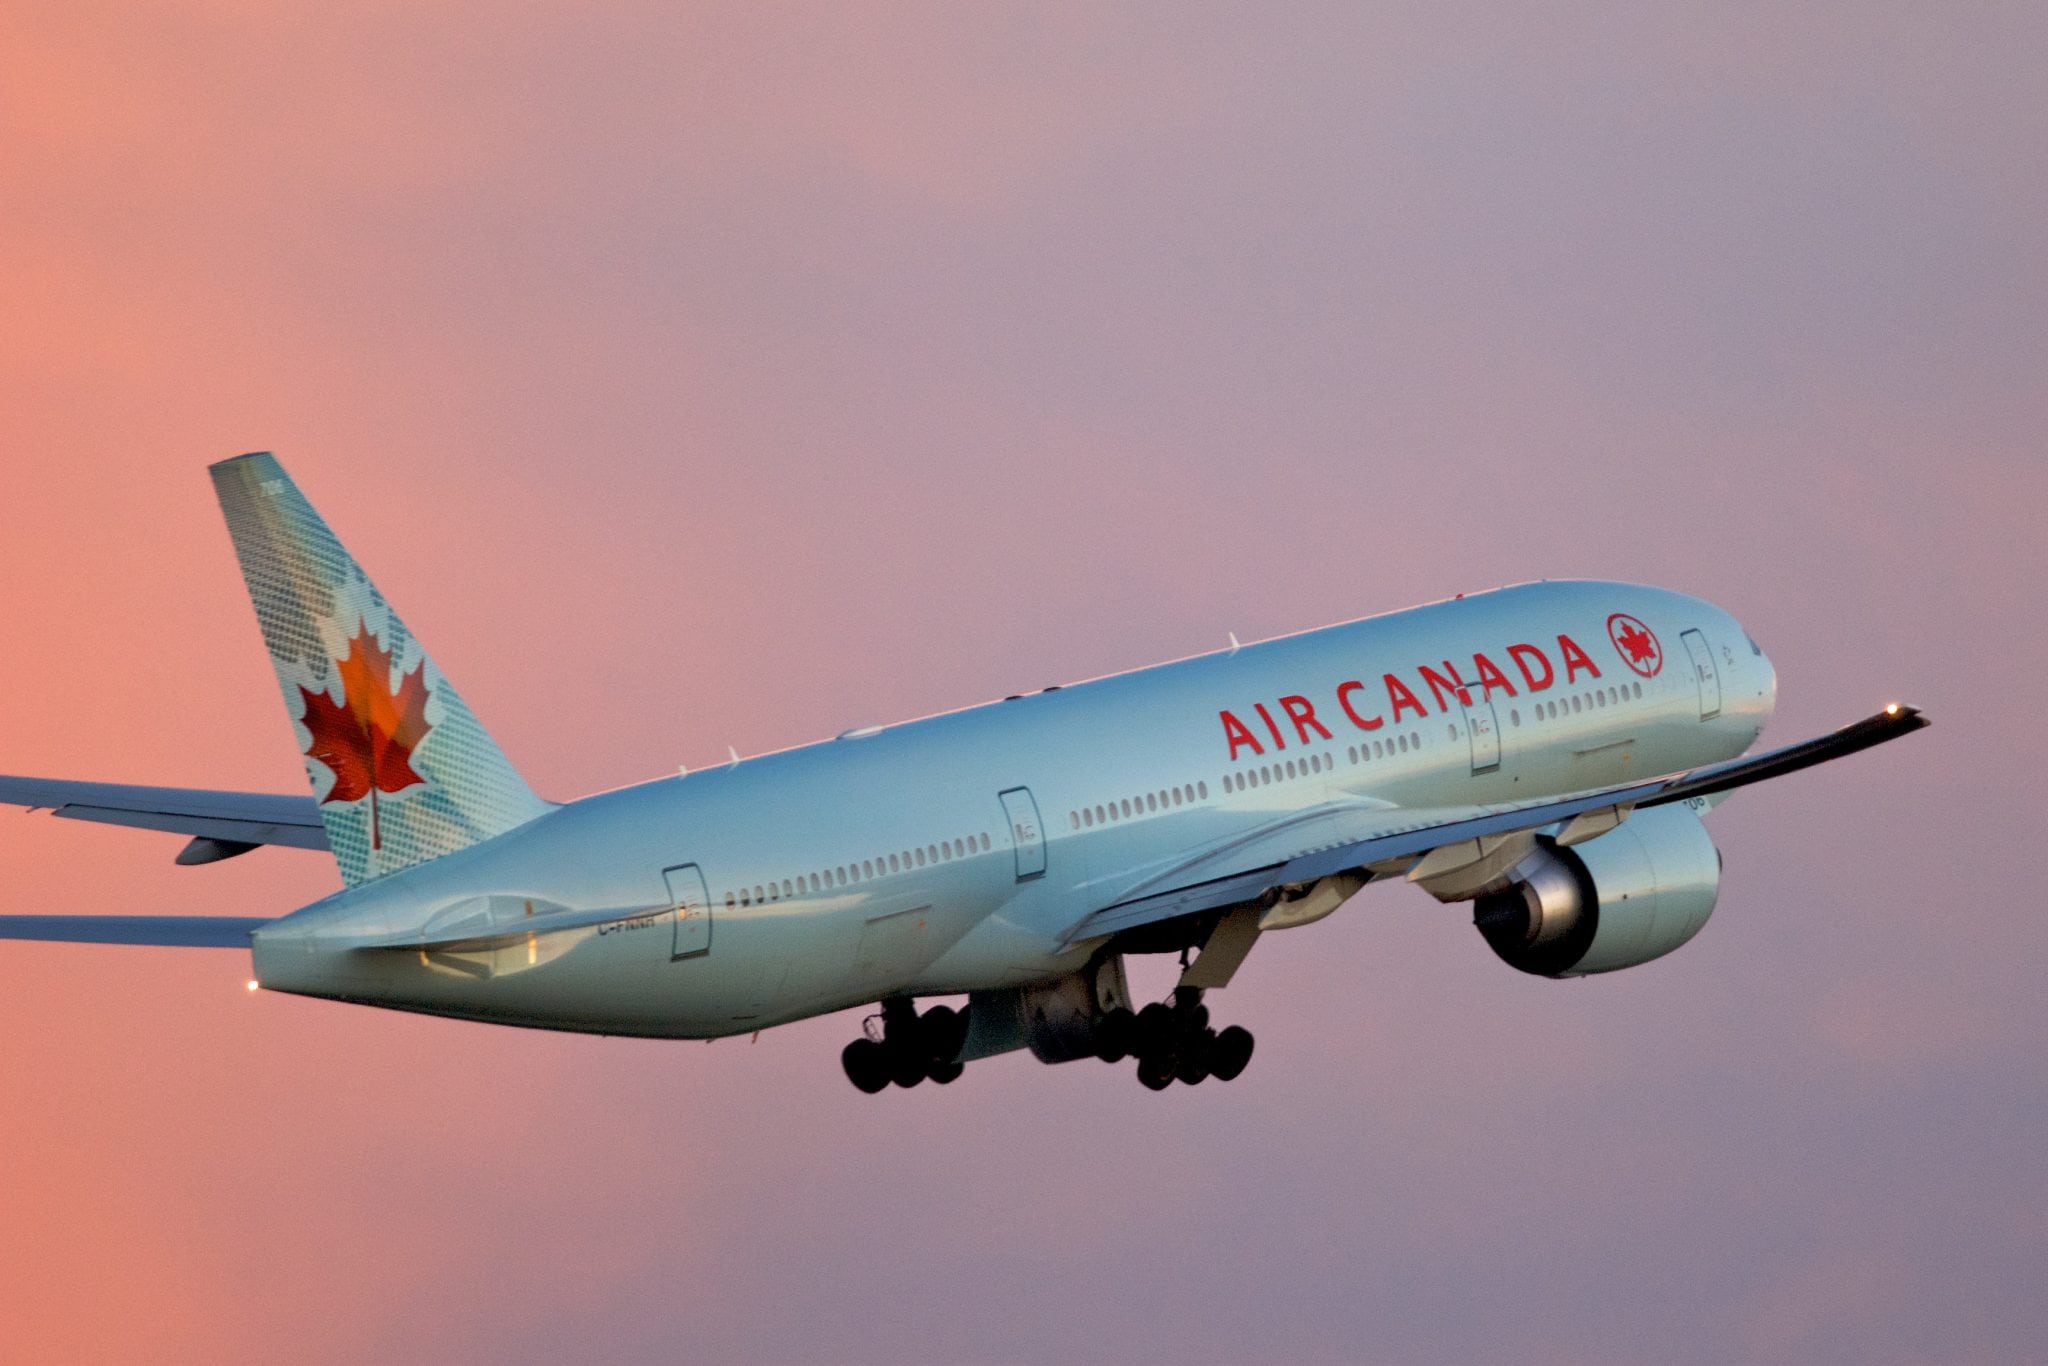 Air Canada aircraft in flight